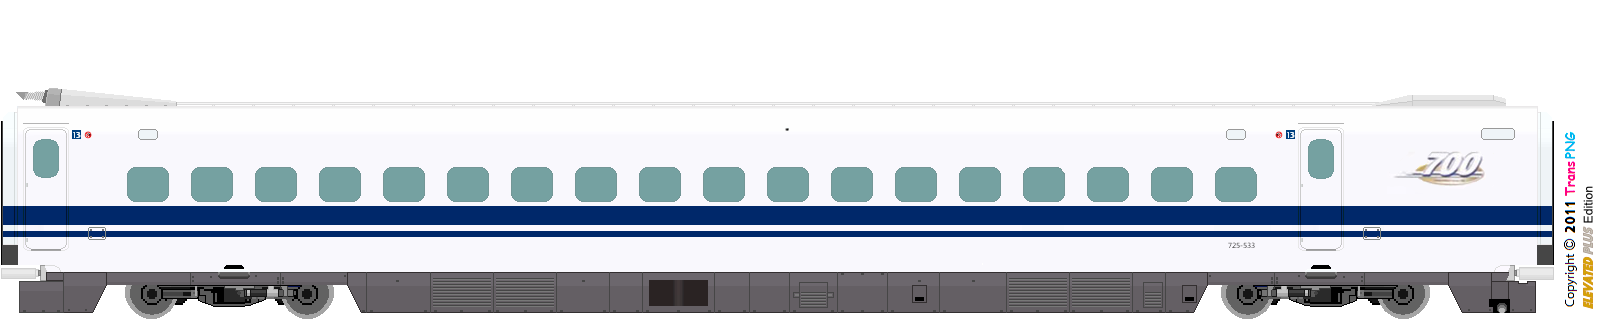 9010 - [9010] Central Japan Railway 52288069085_6570ac2bcf_o